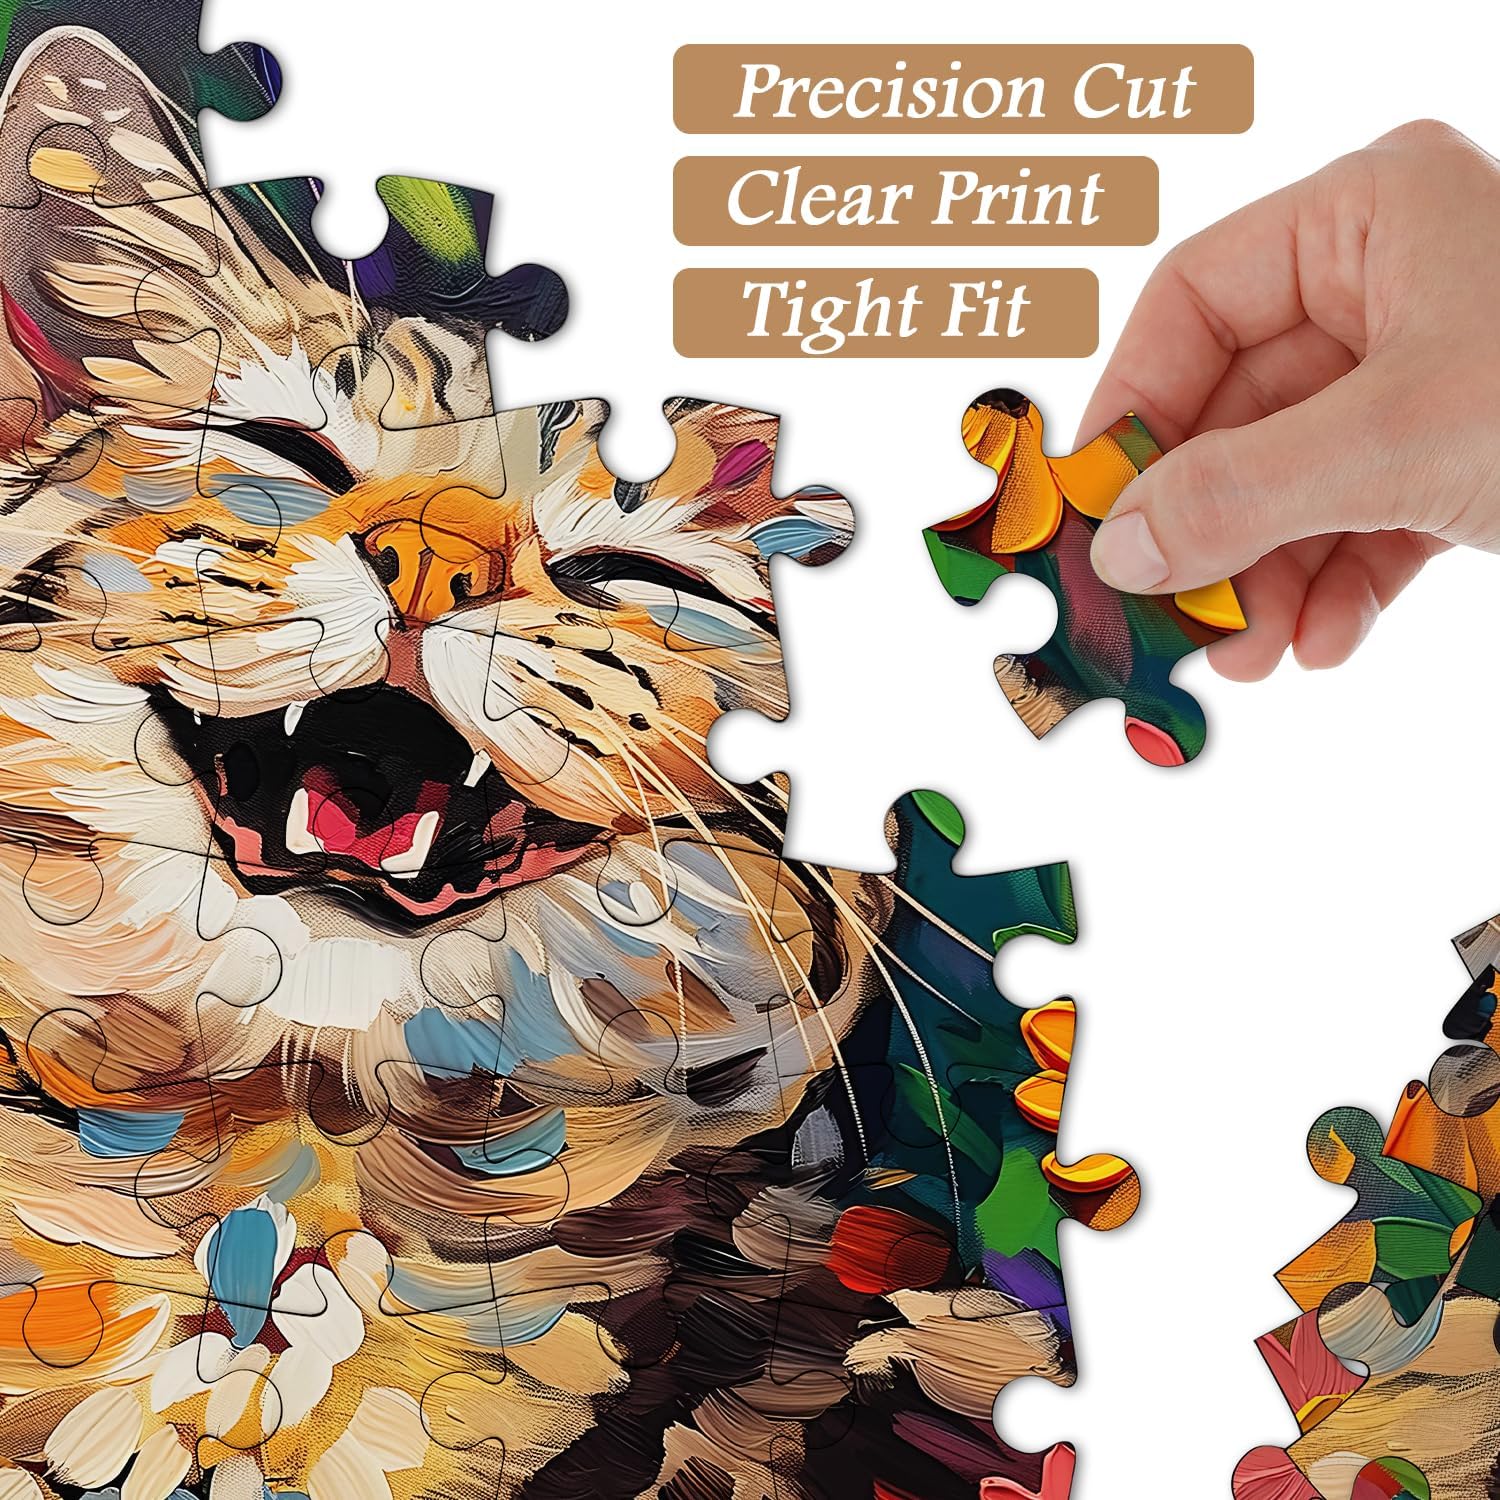 Impression Cat Jigsaw Puzzles 1000 Pieces